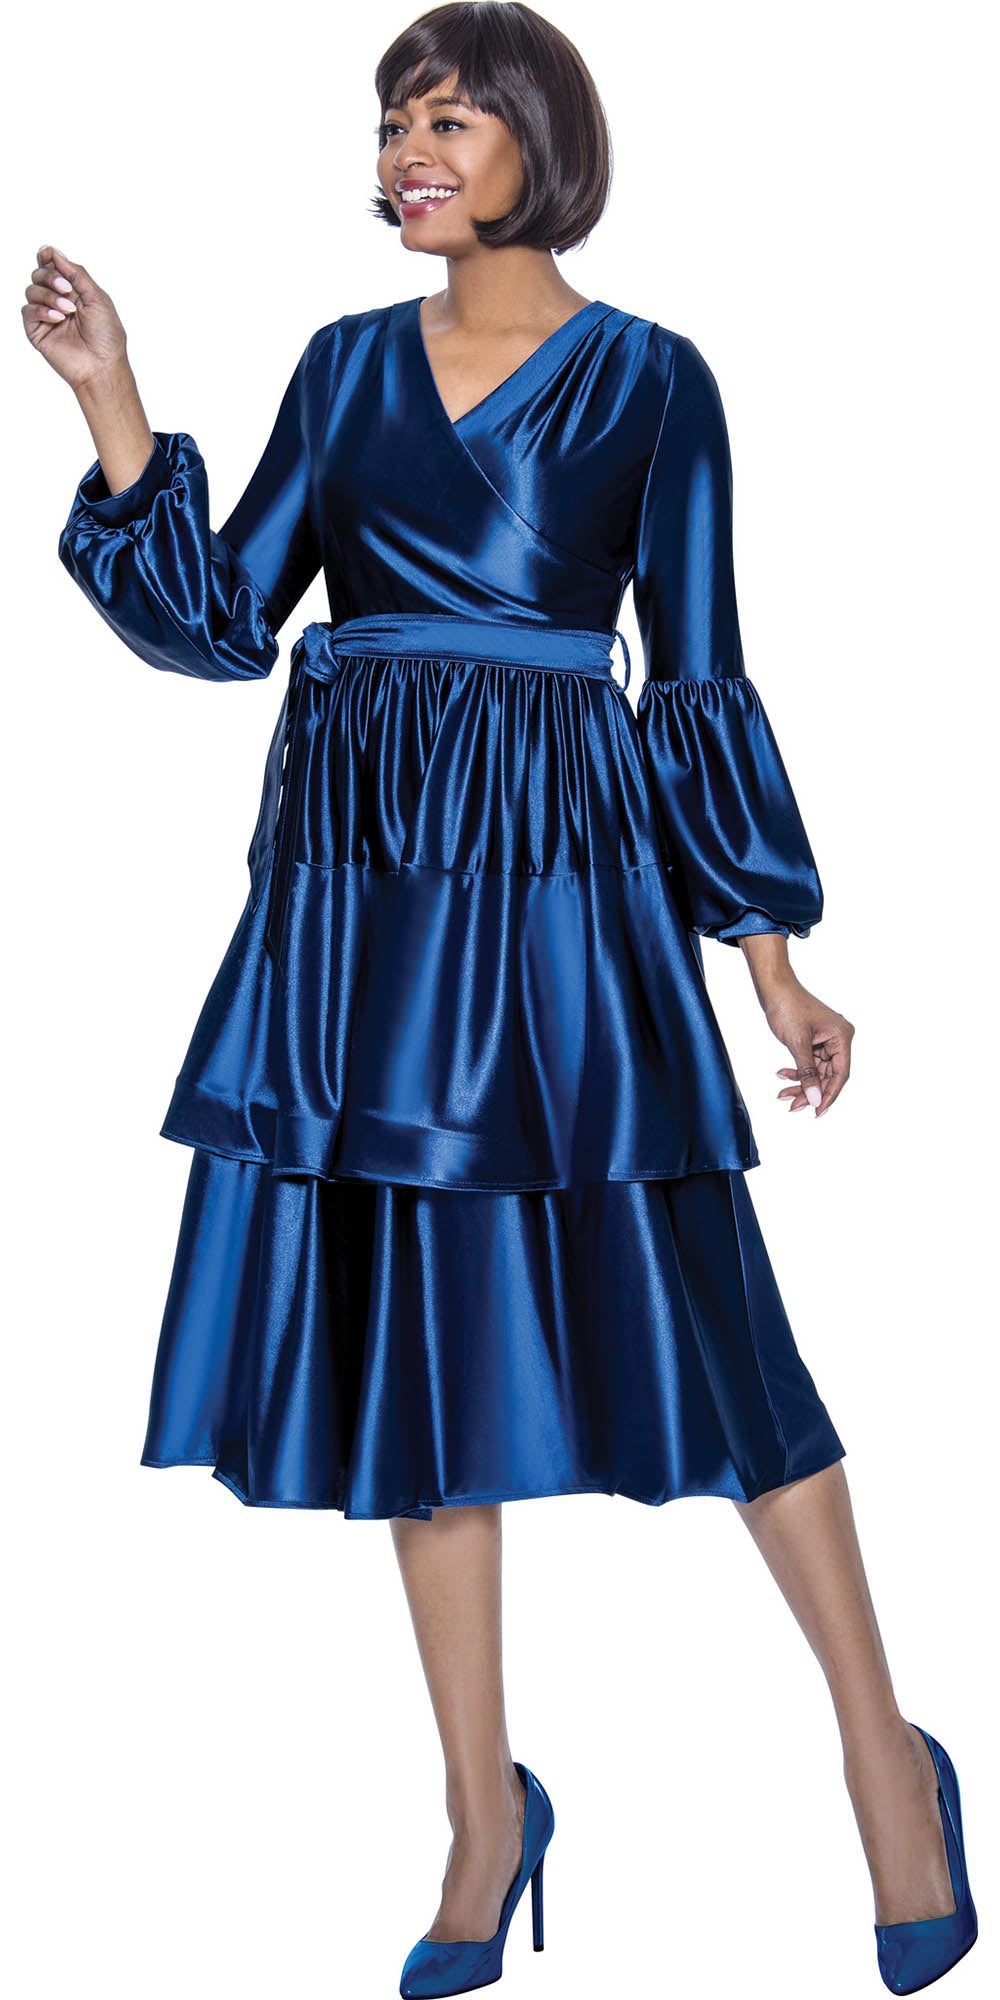 Terramina 7026 - Navy - Silk Look Dress with Tiered Skirt and Sash Tie